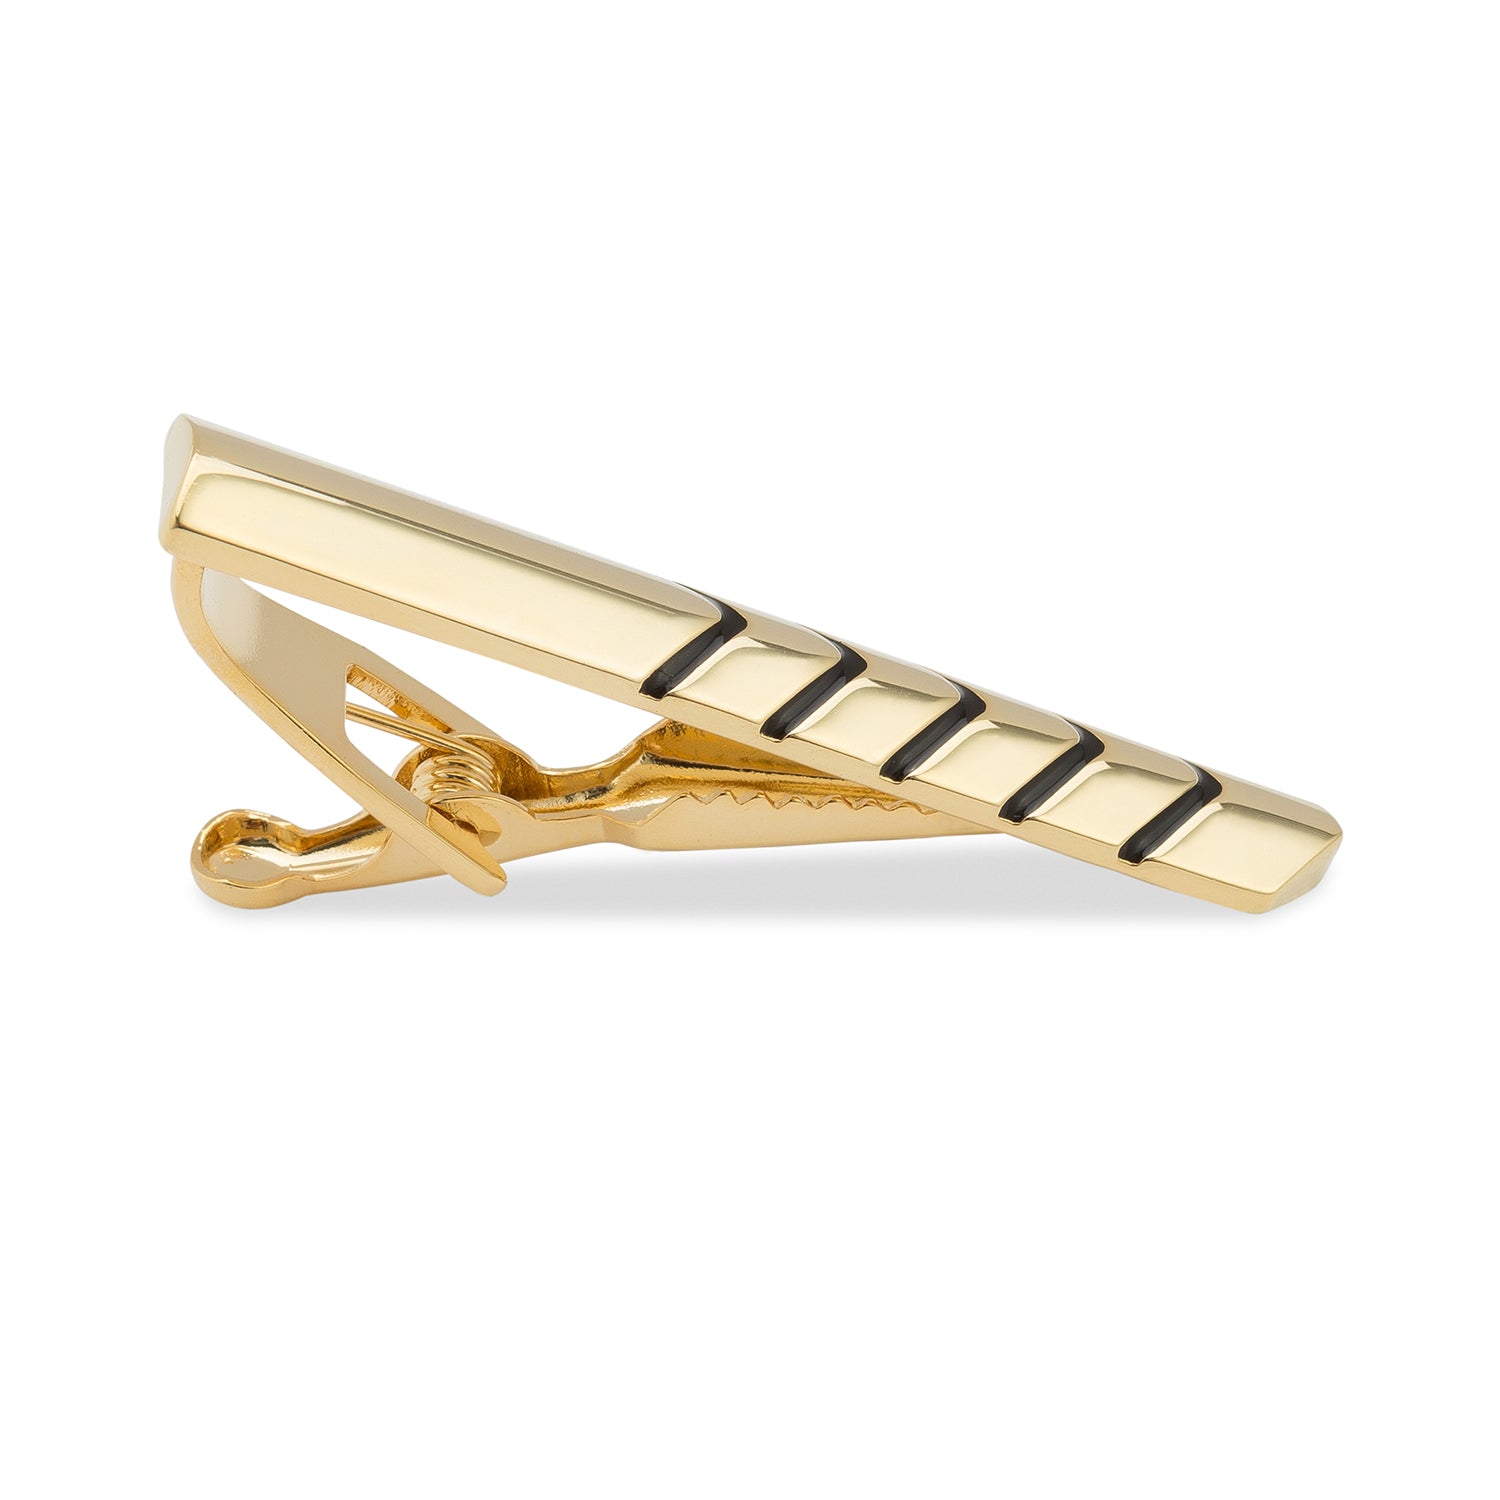 Bufalino Gold Tie Bars